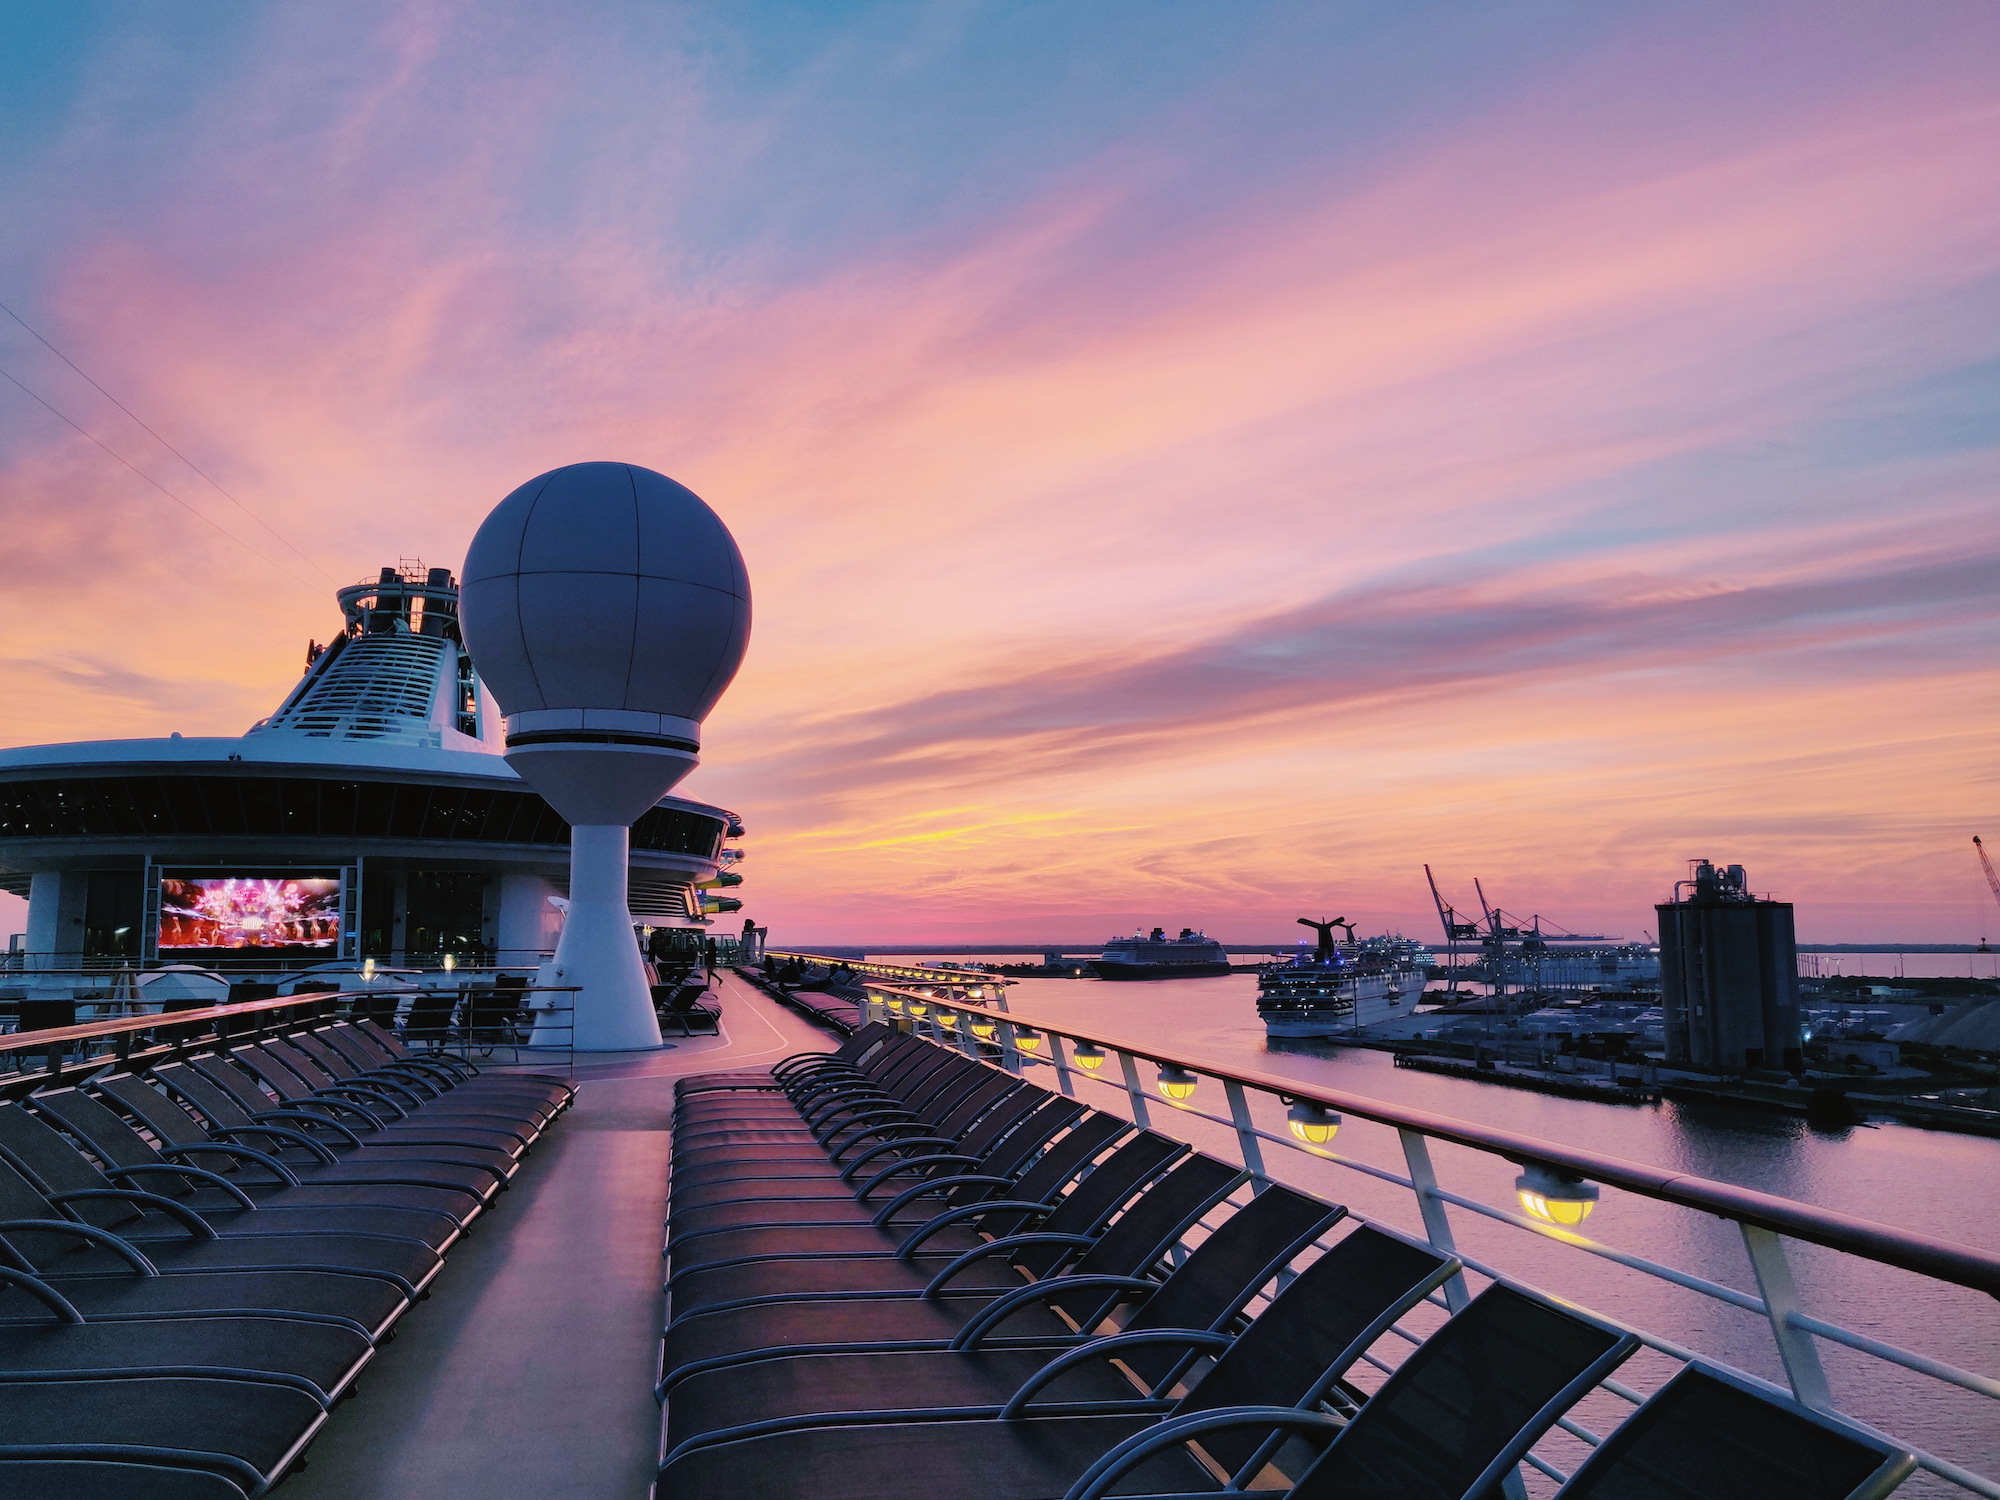 Royal Caribbean's Mariner of the Seas docked at sunset